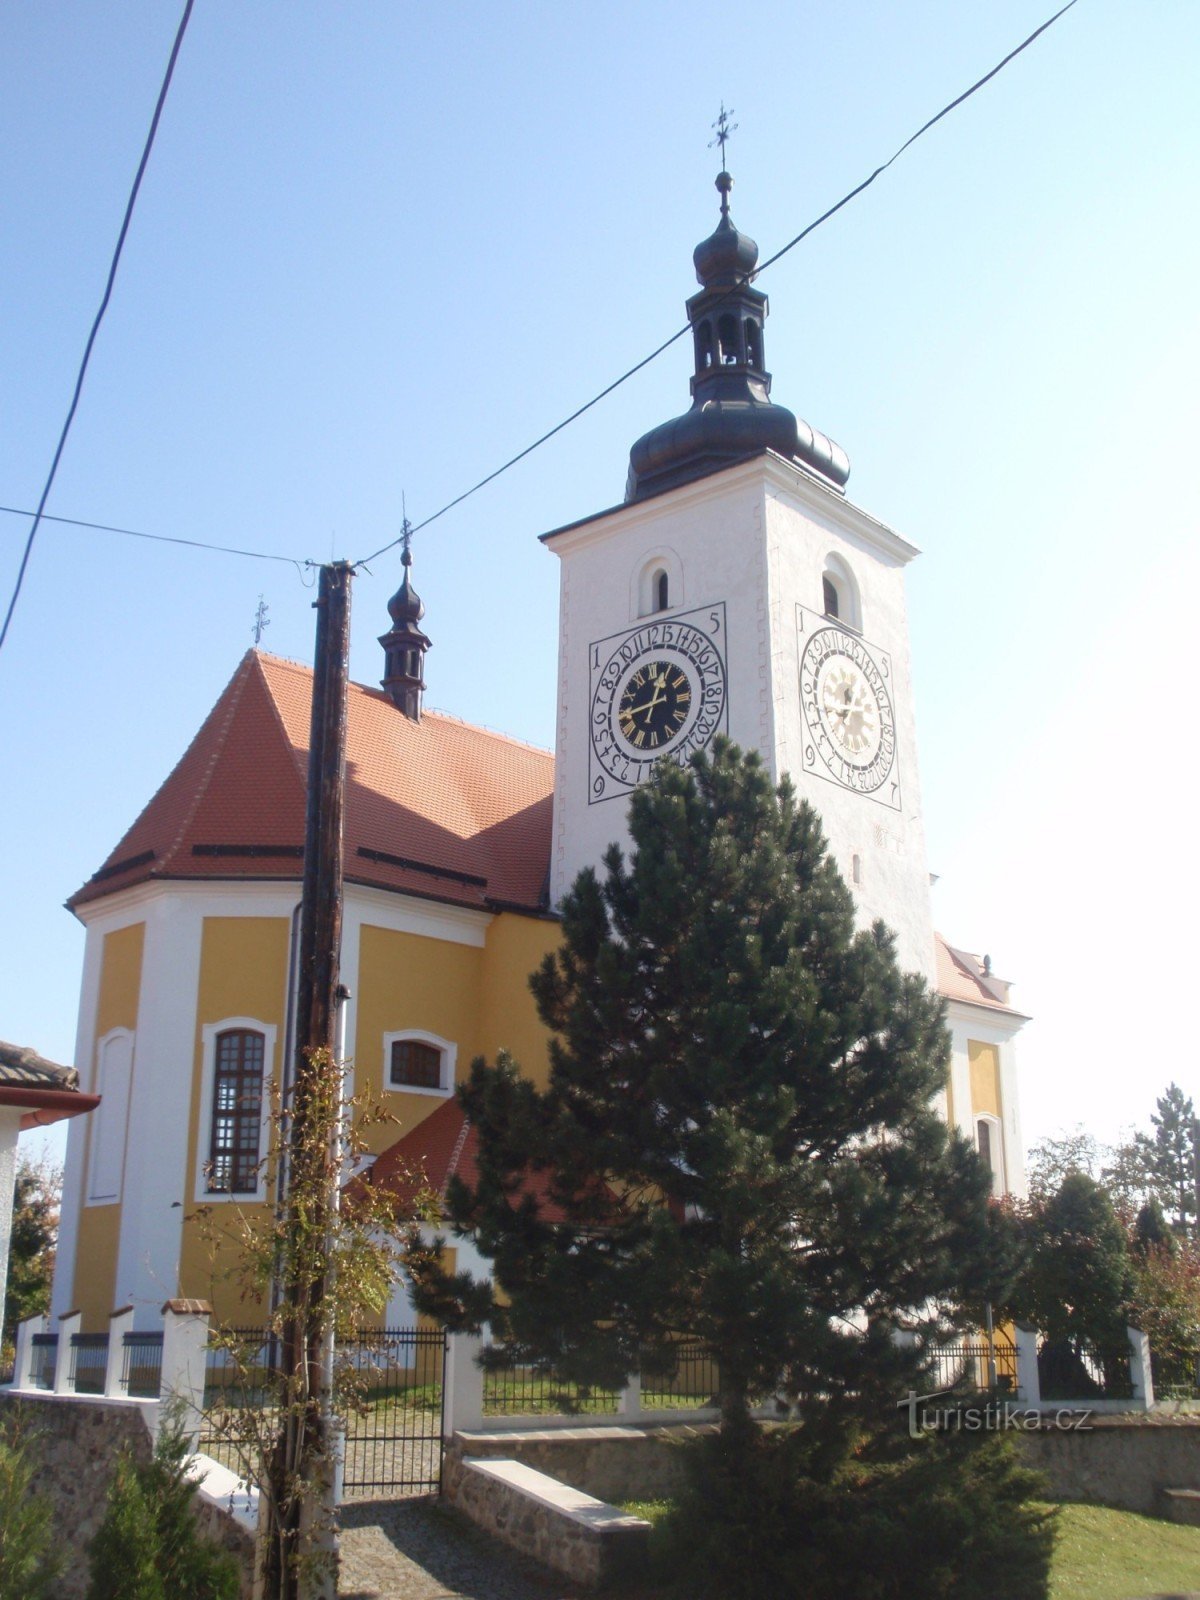 Die Stadt Stařeč bei Třebíč